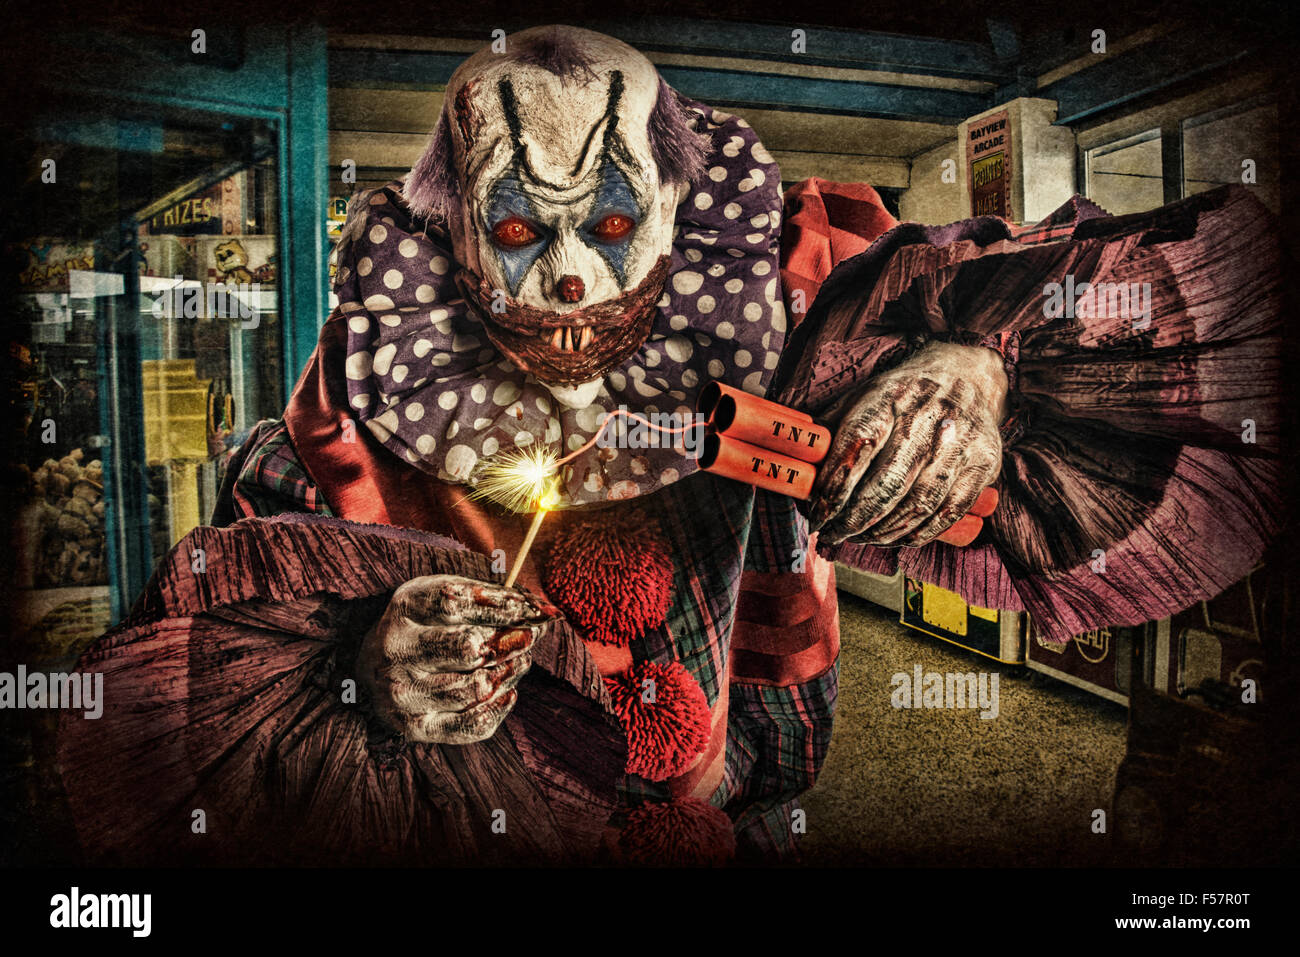 Scary creepy clown with TNT/Dynamite, Stock Photo